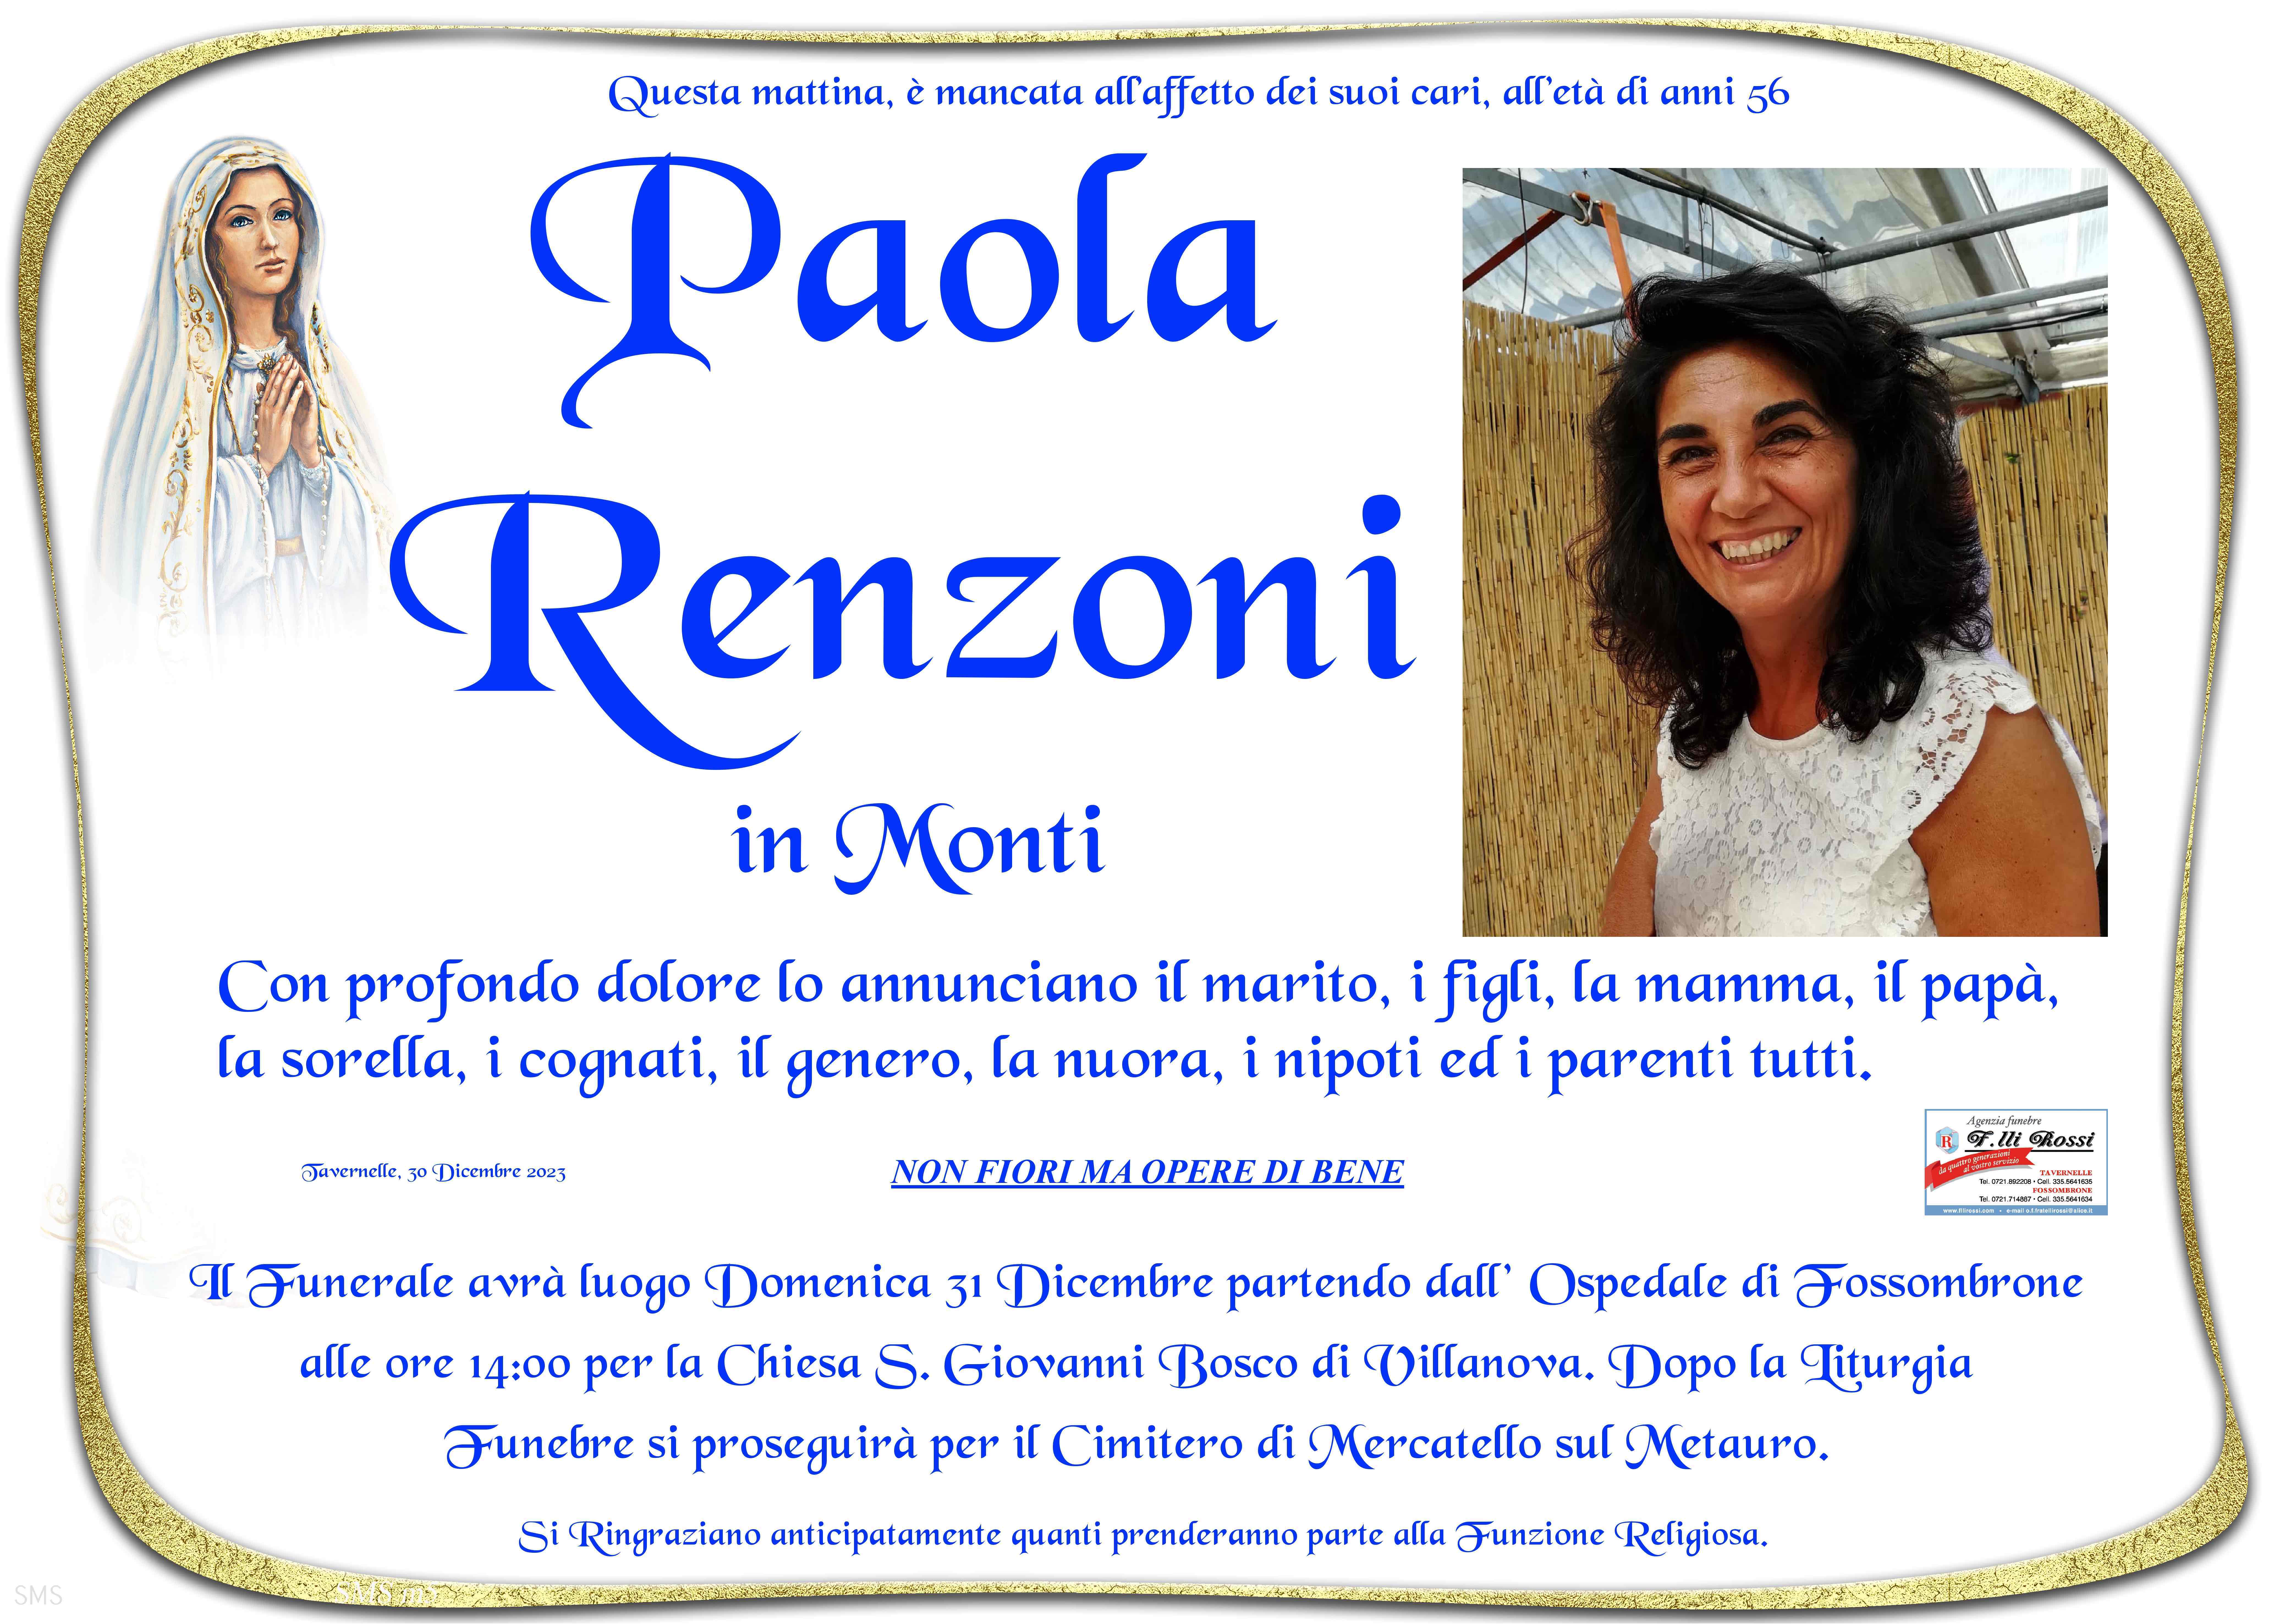 Paola Renzoni